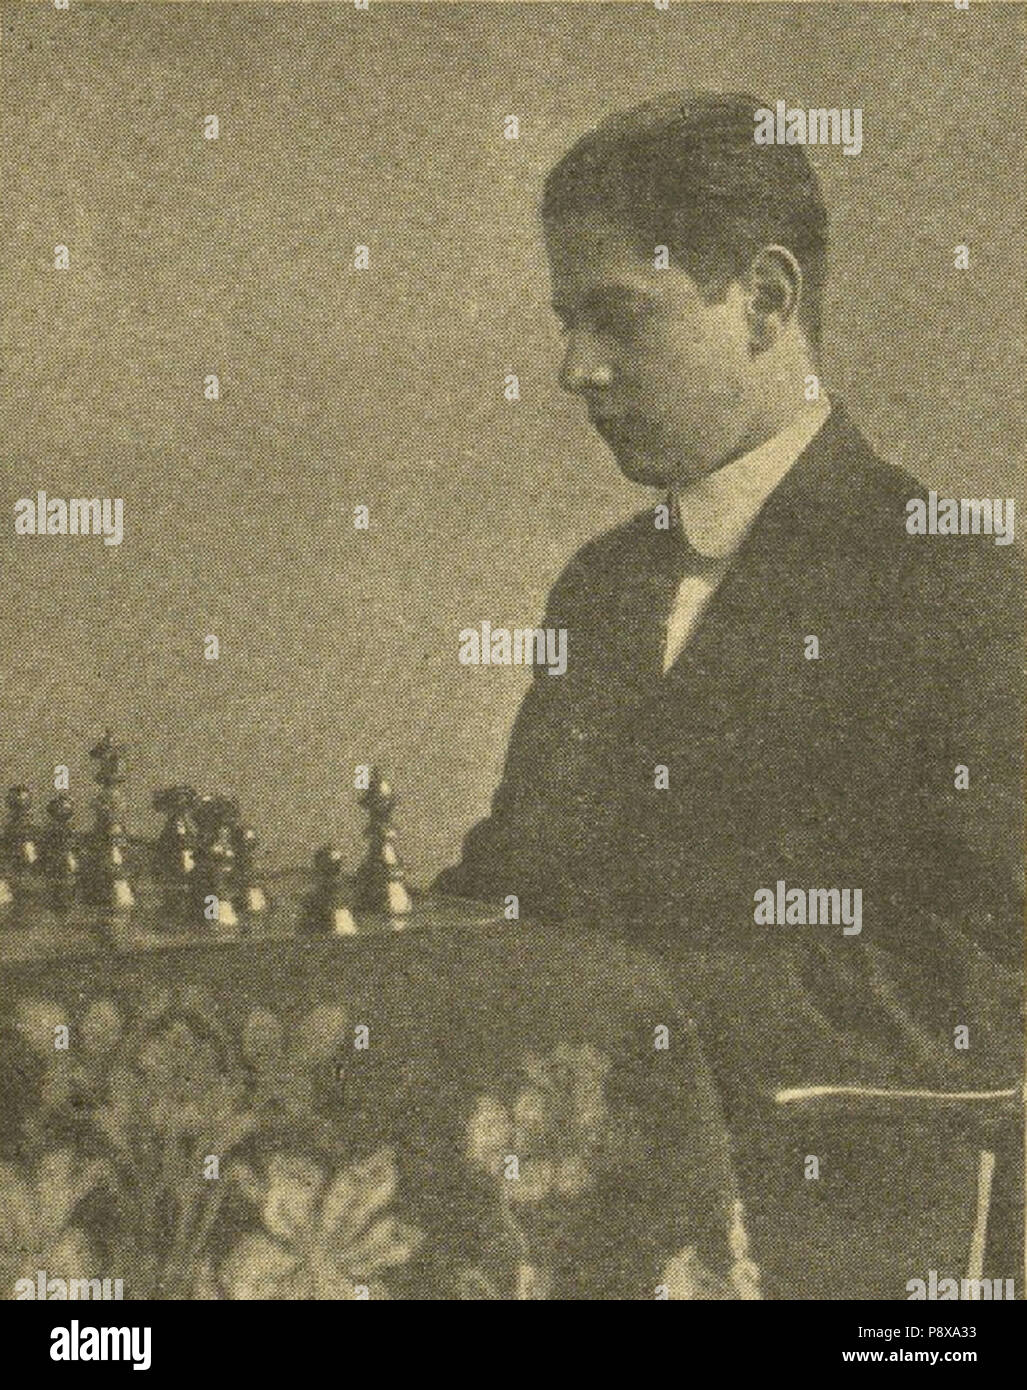 File:Partida entre Capablanca e Alekhine.jpg - Wikimedia Commons